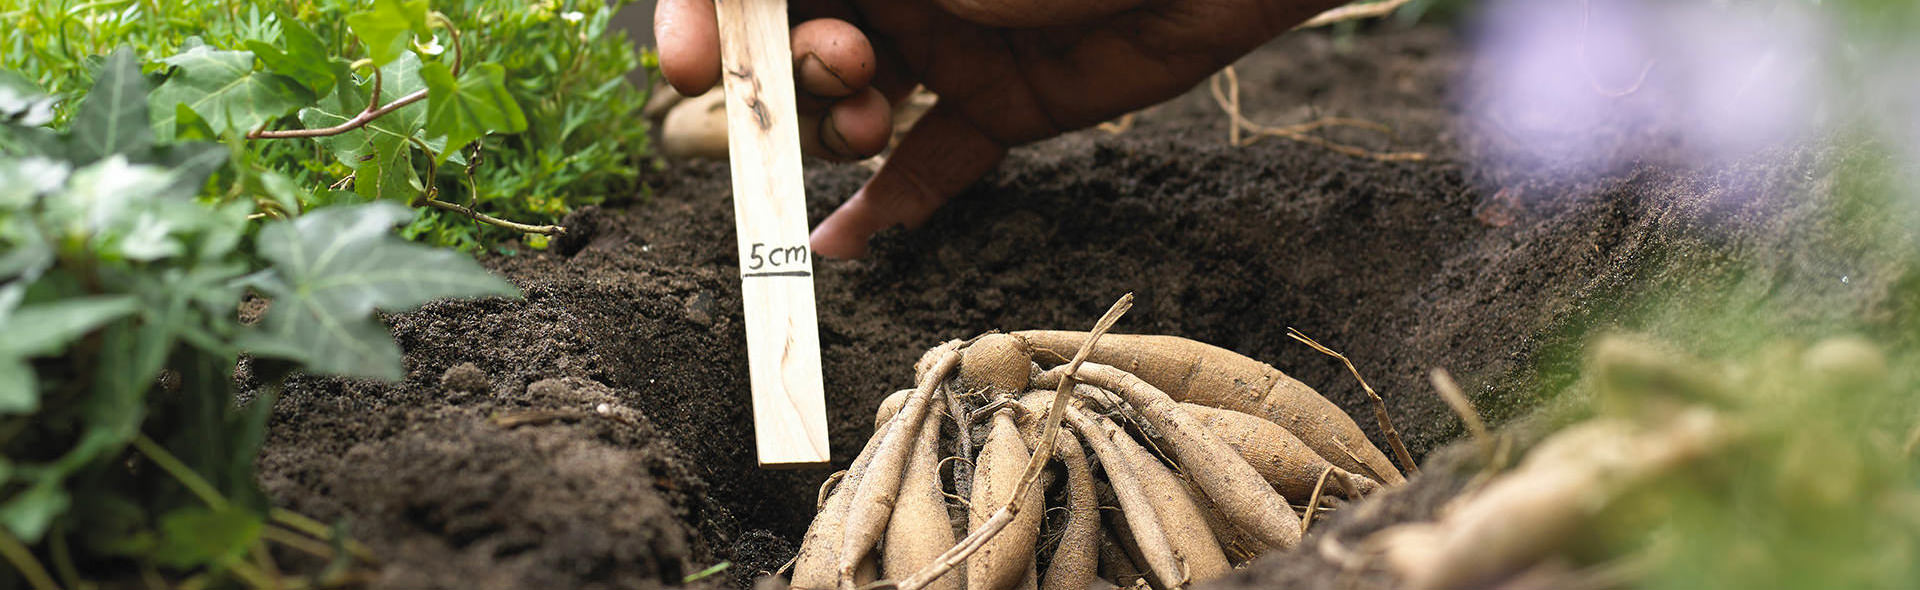 Measuring the depth of the soil